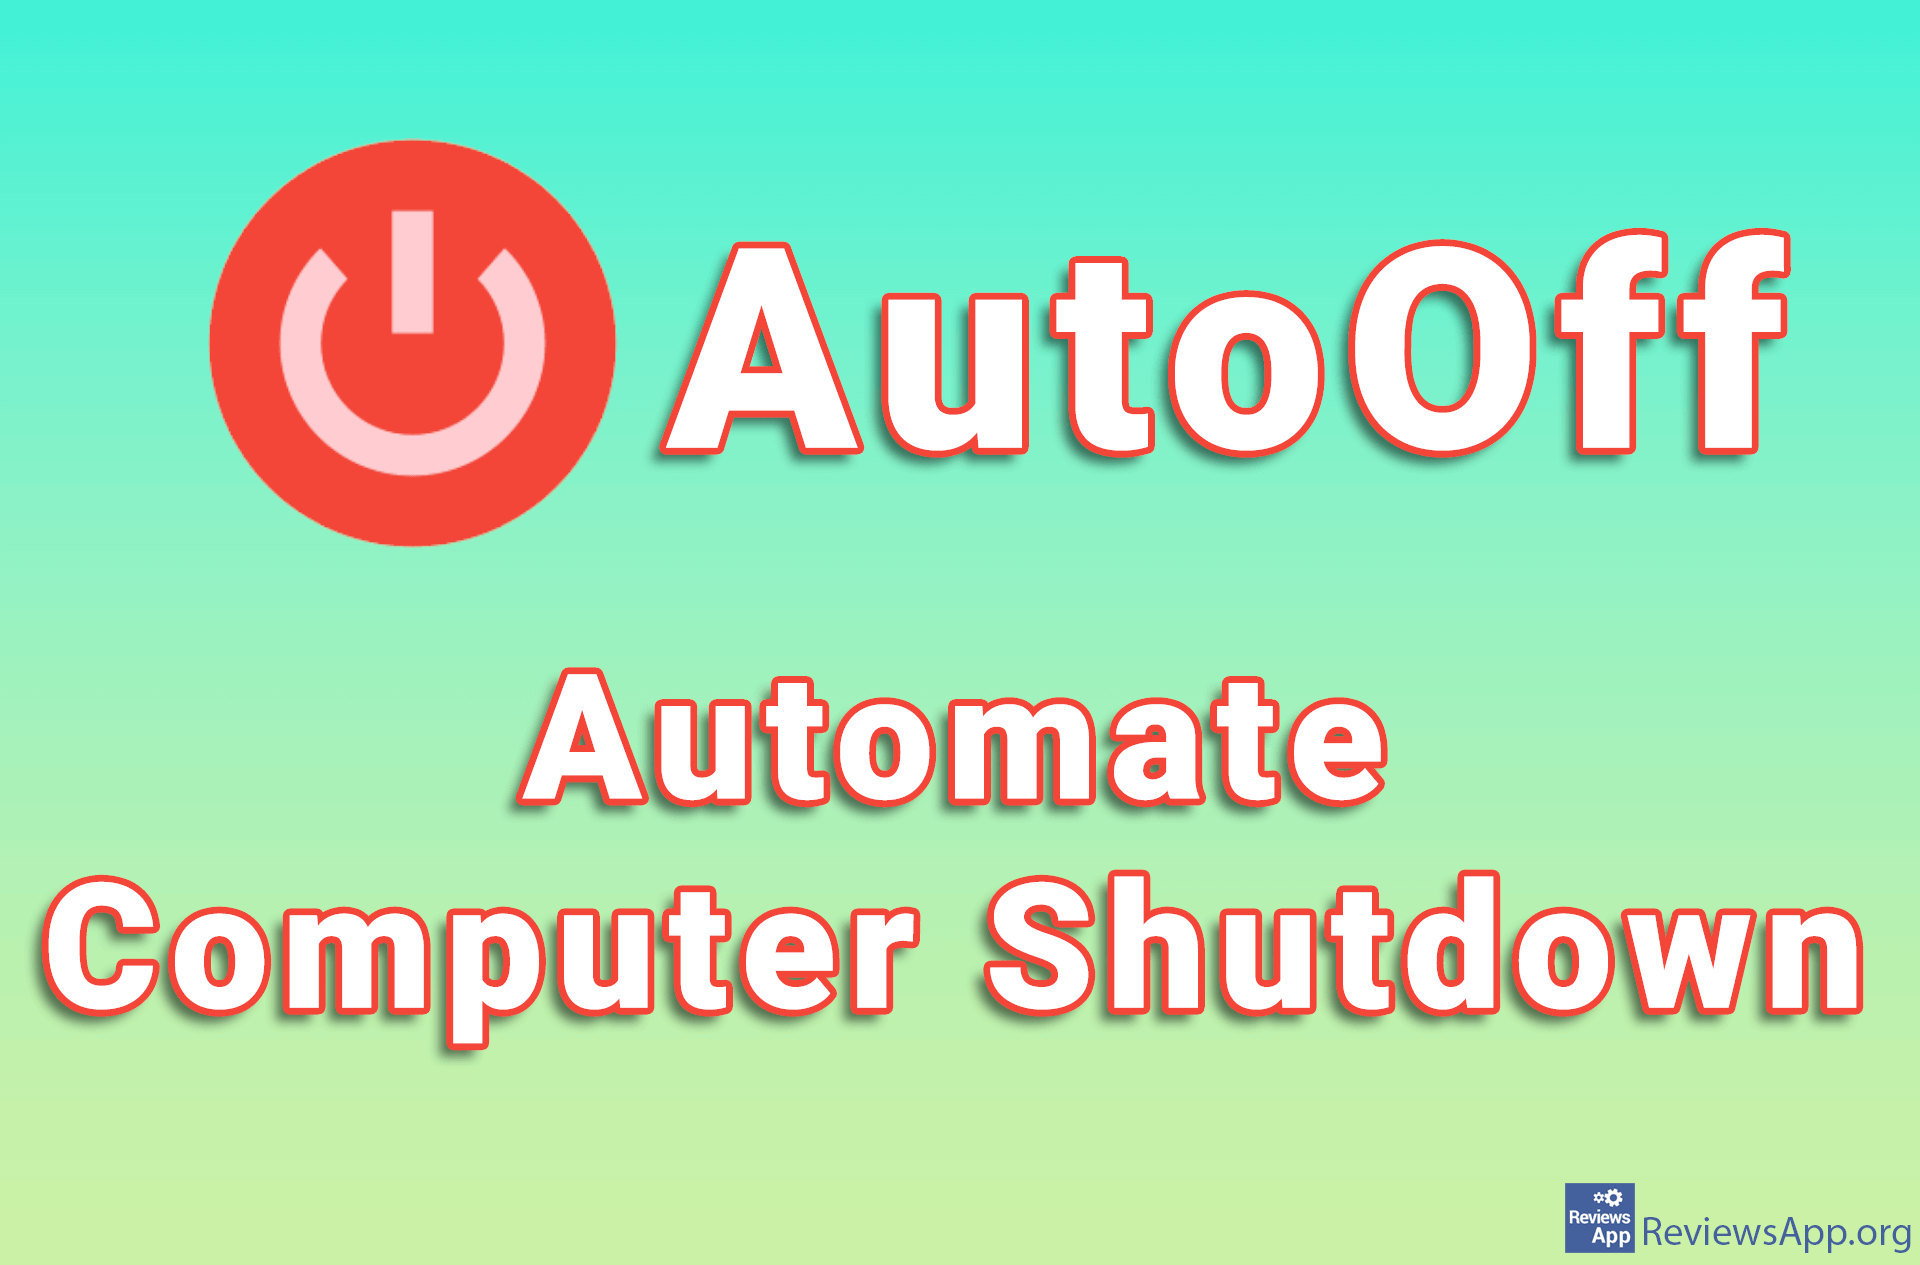 AutoOff – Automate Computer Shutdown